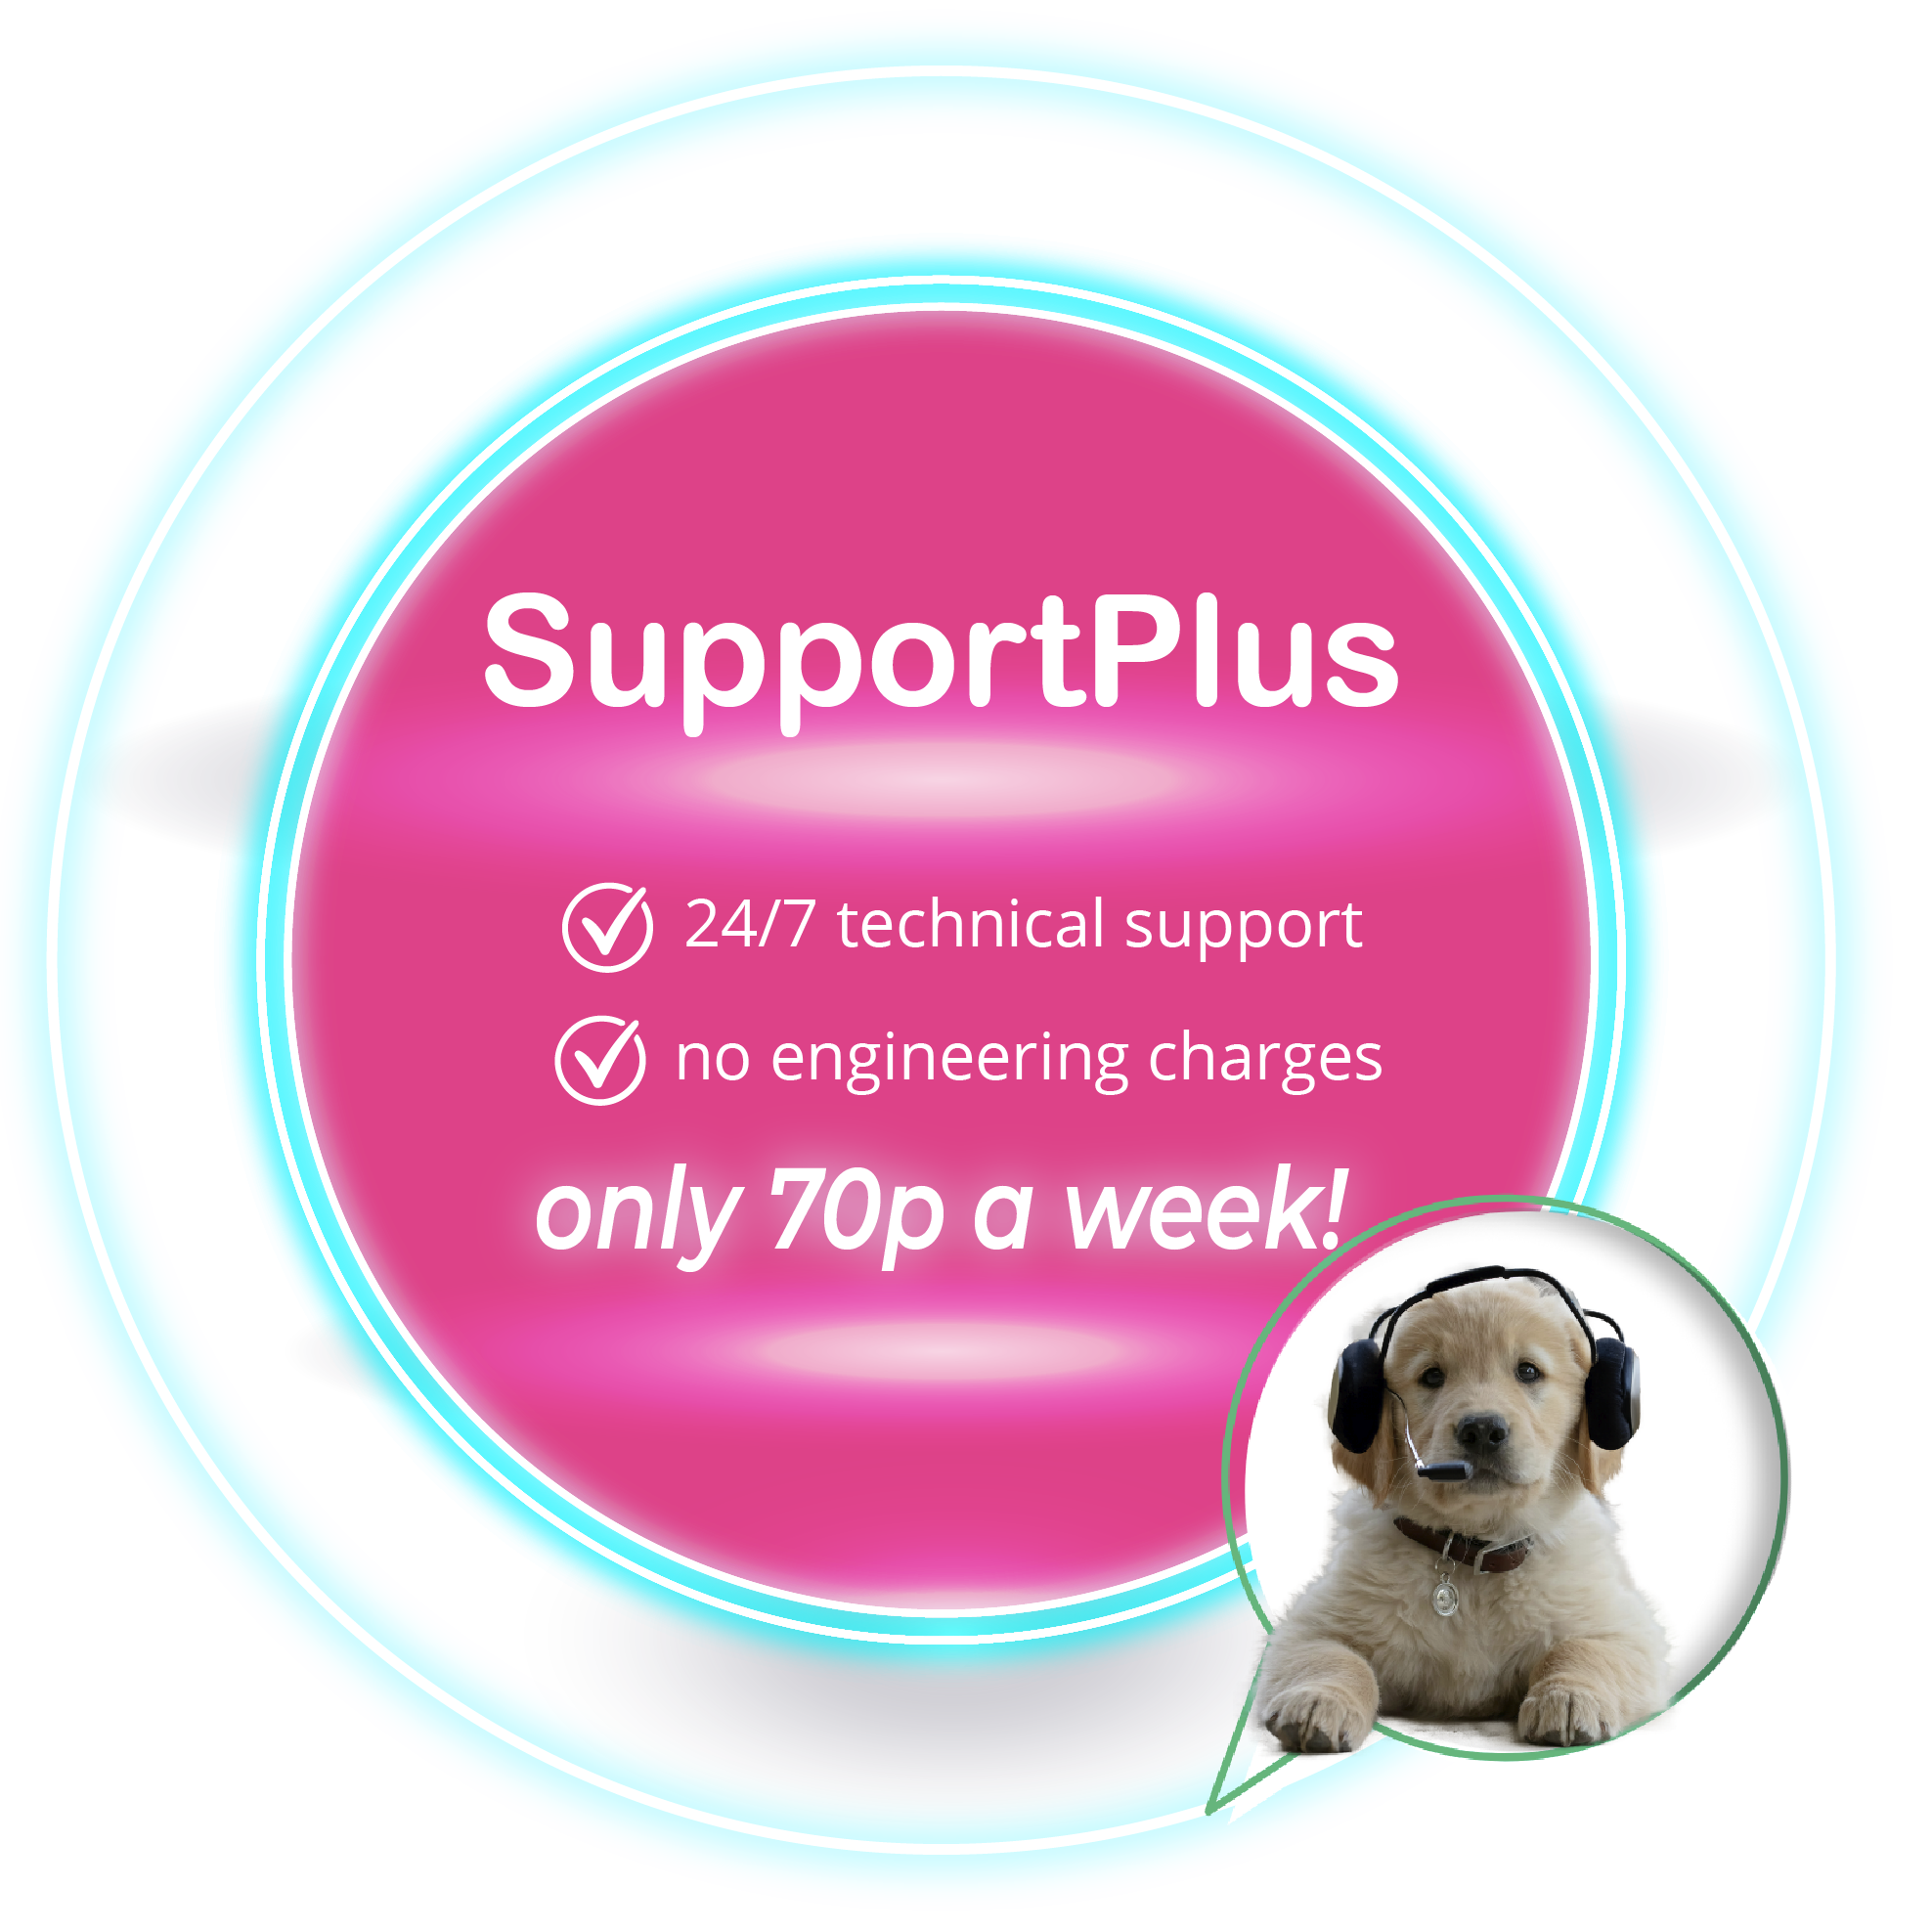 Support Plus